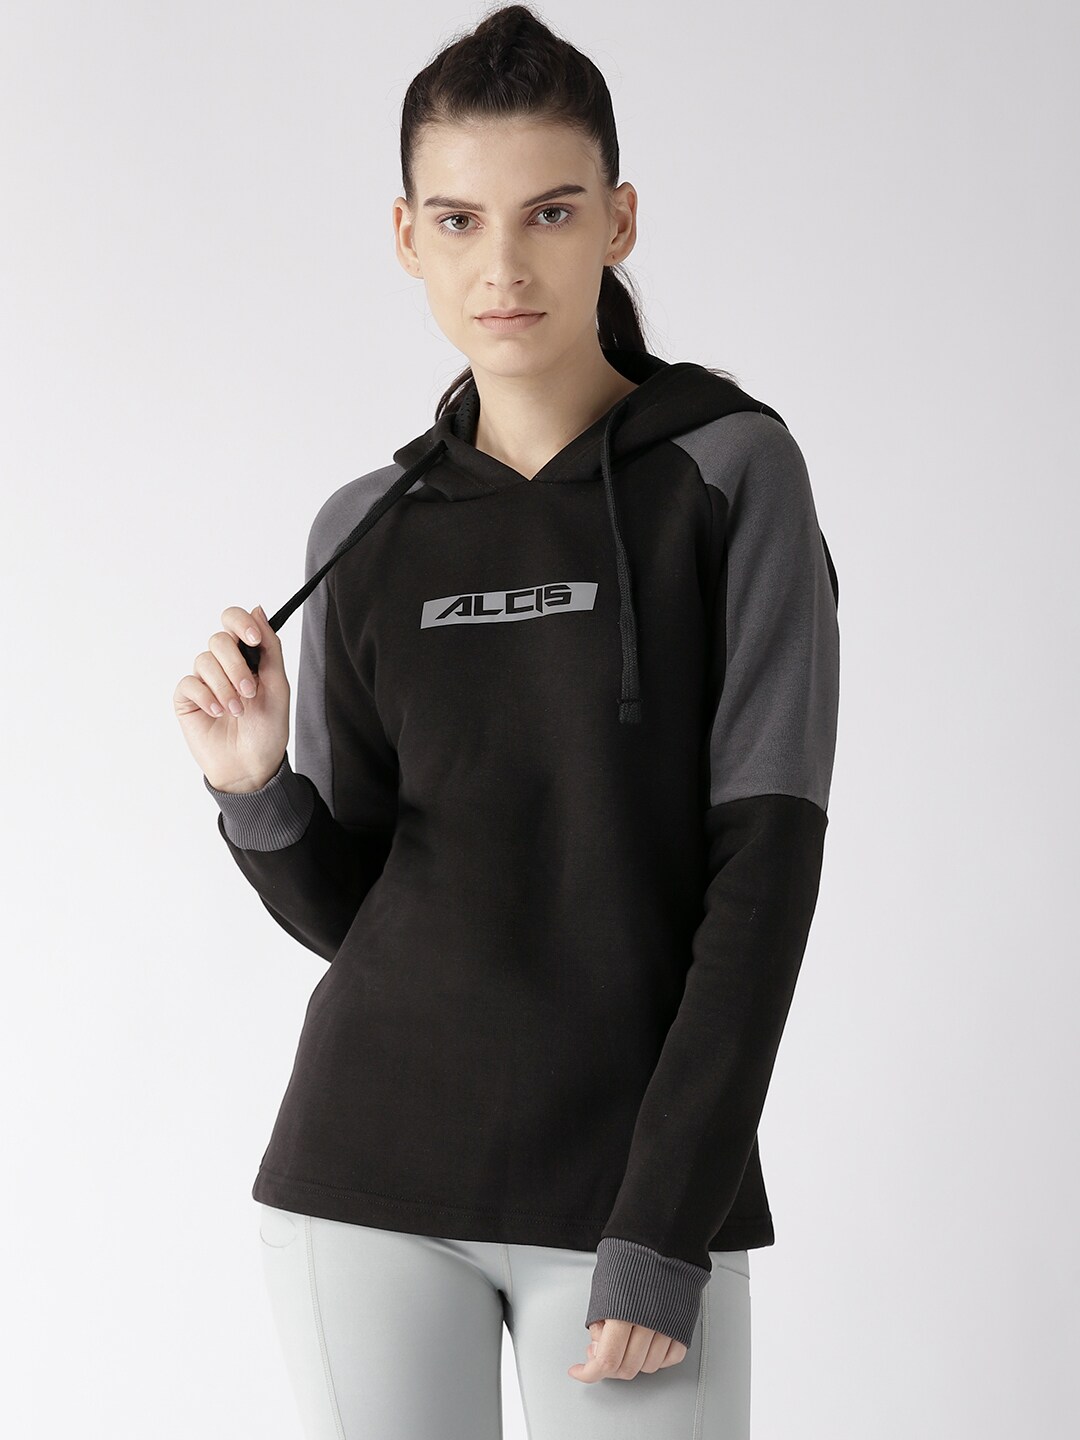 Alcis Women Black & Charcoal Grey Printed Detail Hooded Sweatshirt Price in India